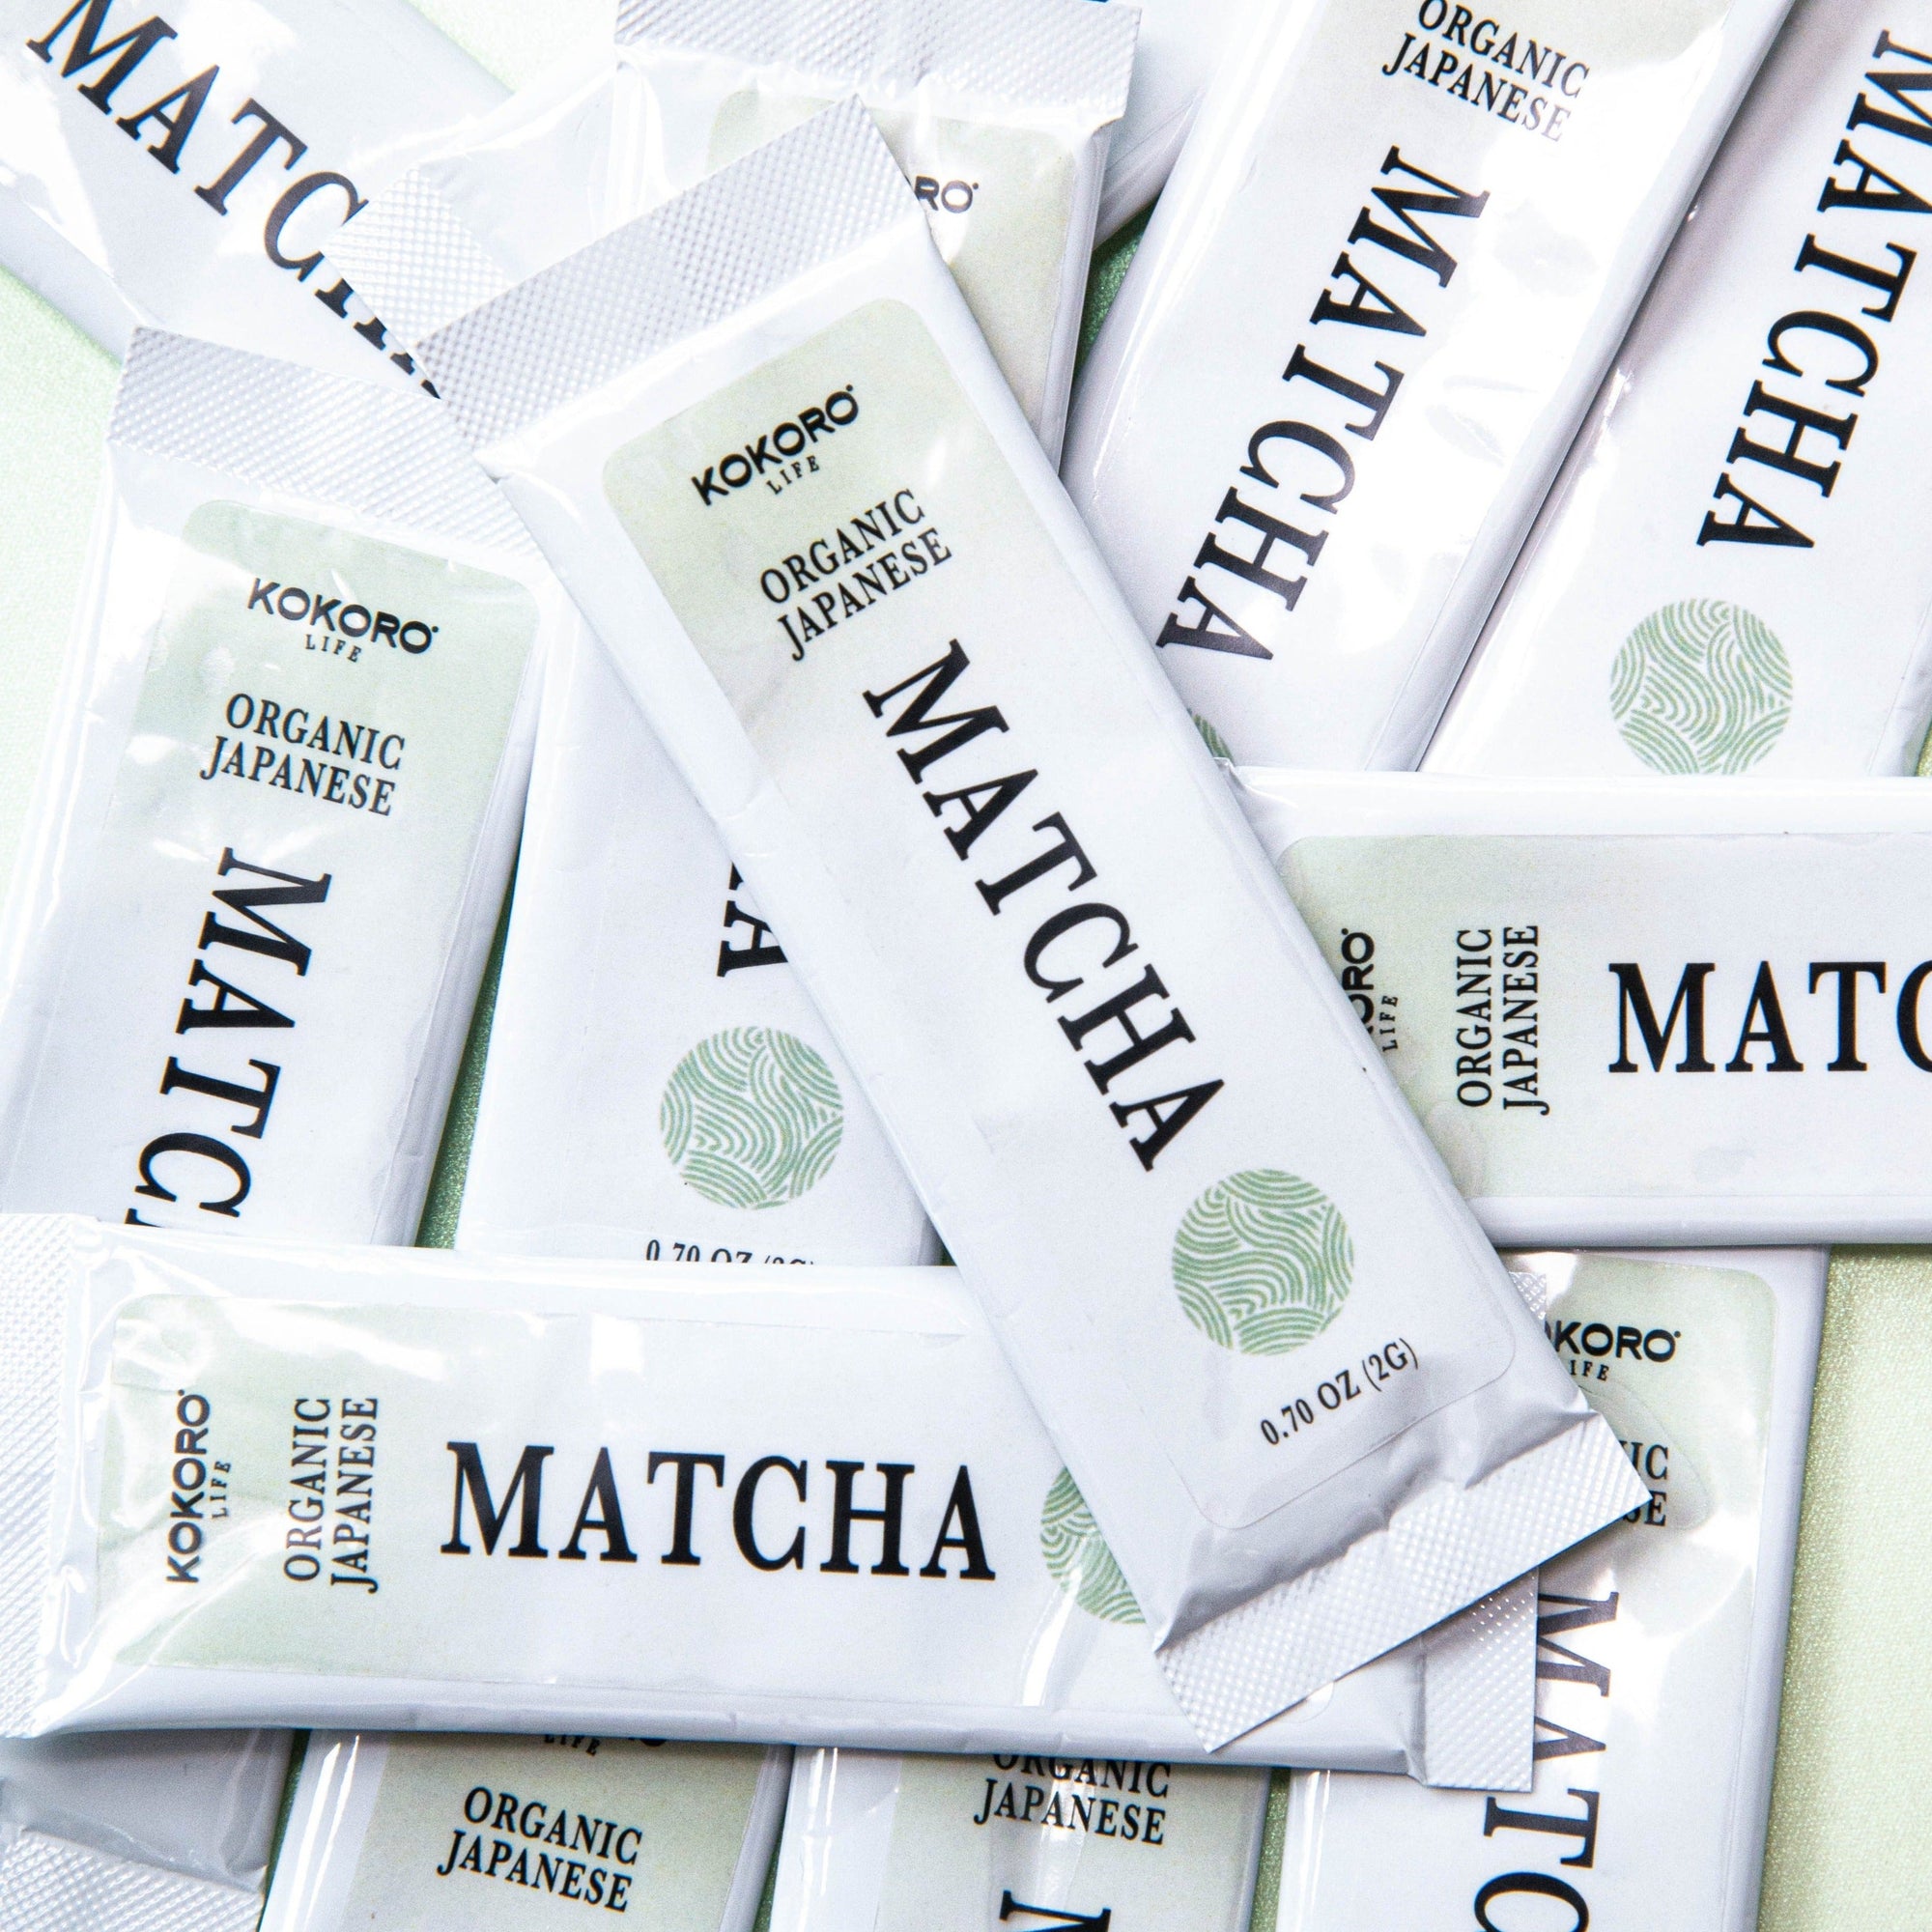 Ceremonial Matcha Sachets, Japanese green tea matcha, 100% organic japanese, matcha ceremonial sachets